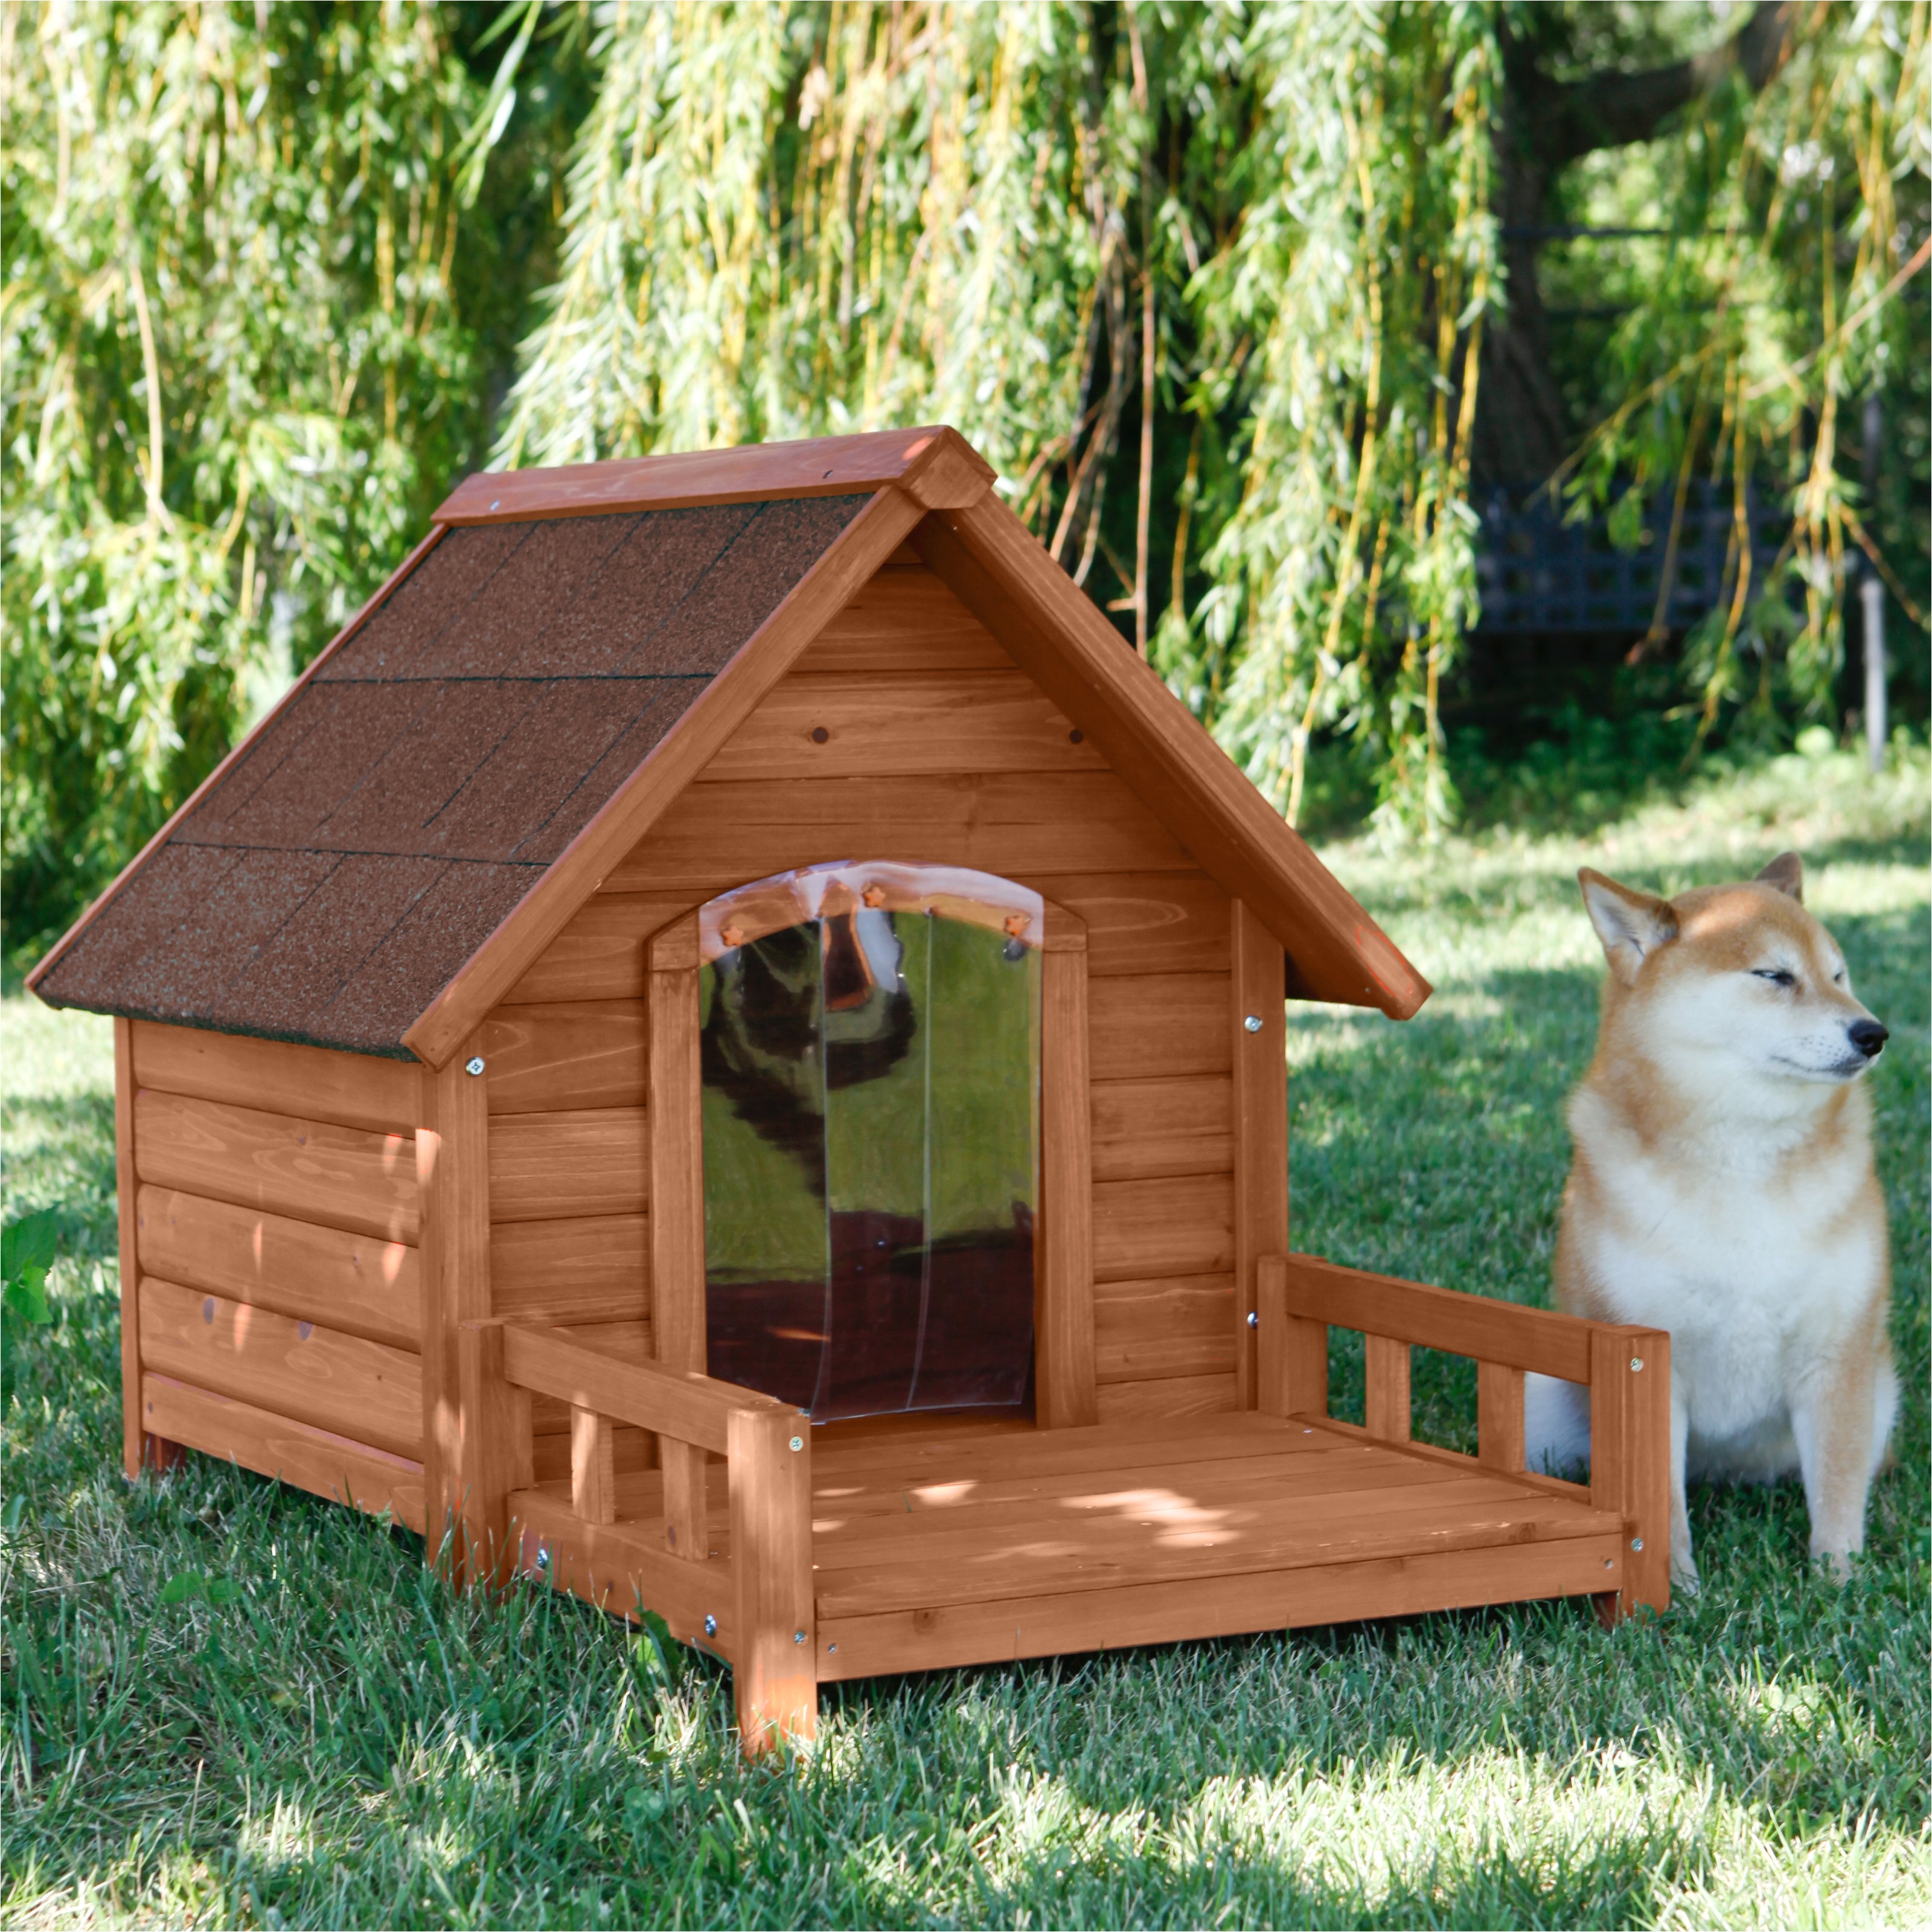 Large Breed Dog House Plans Dog House Plans with Porch Extra Dog House Blueprints Inspirational